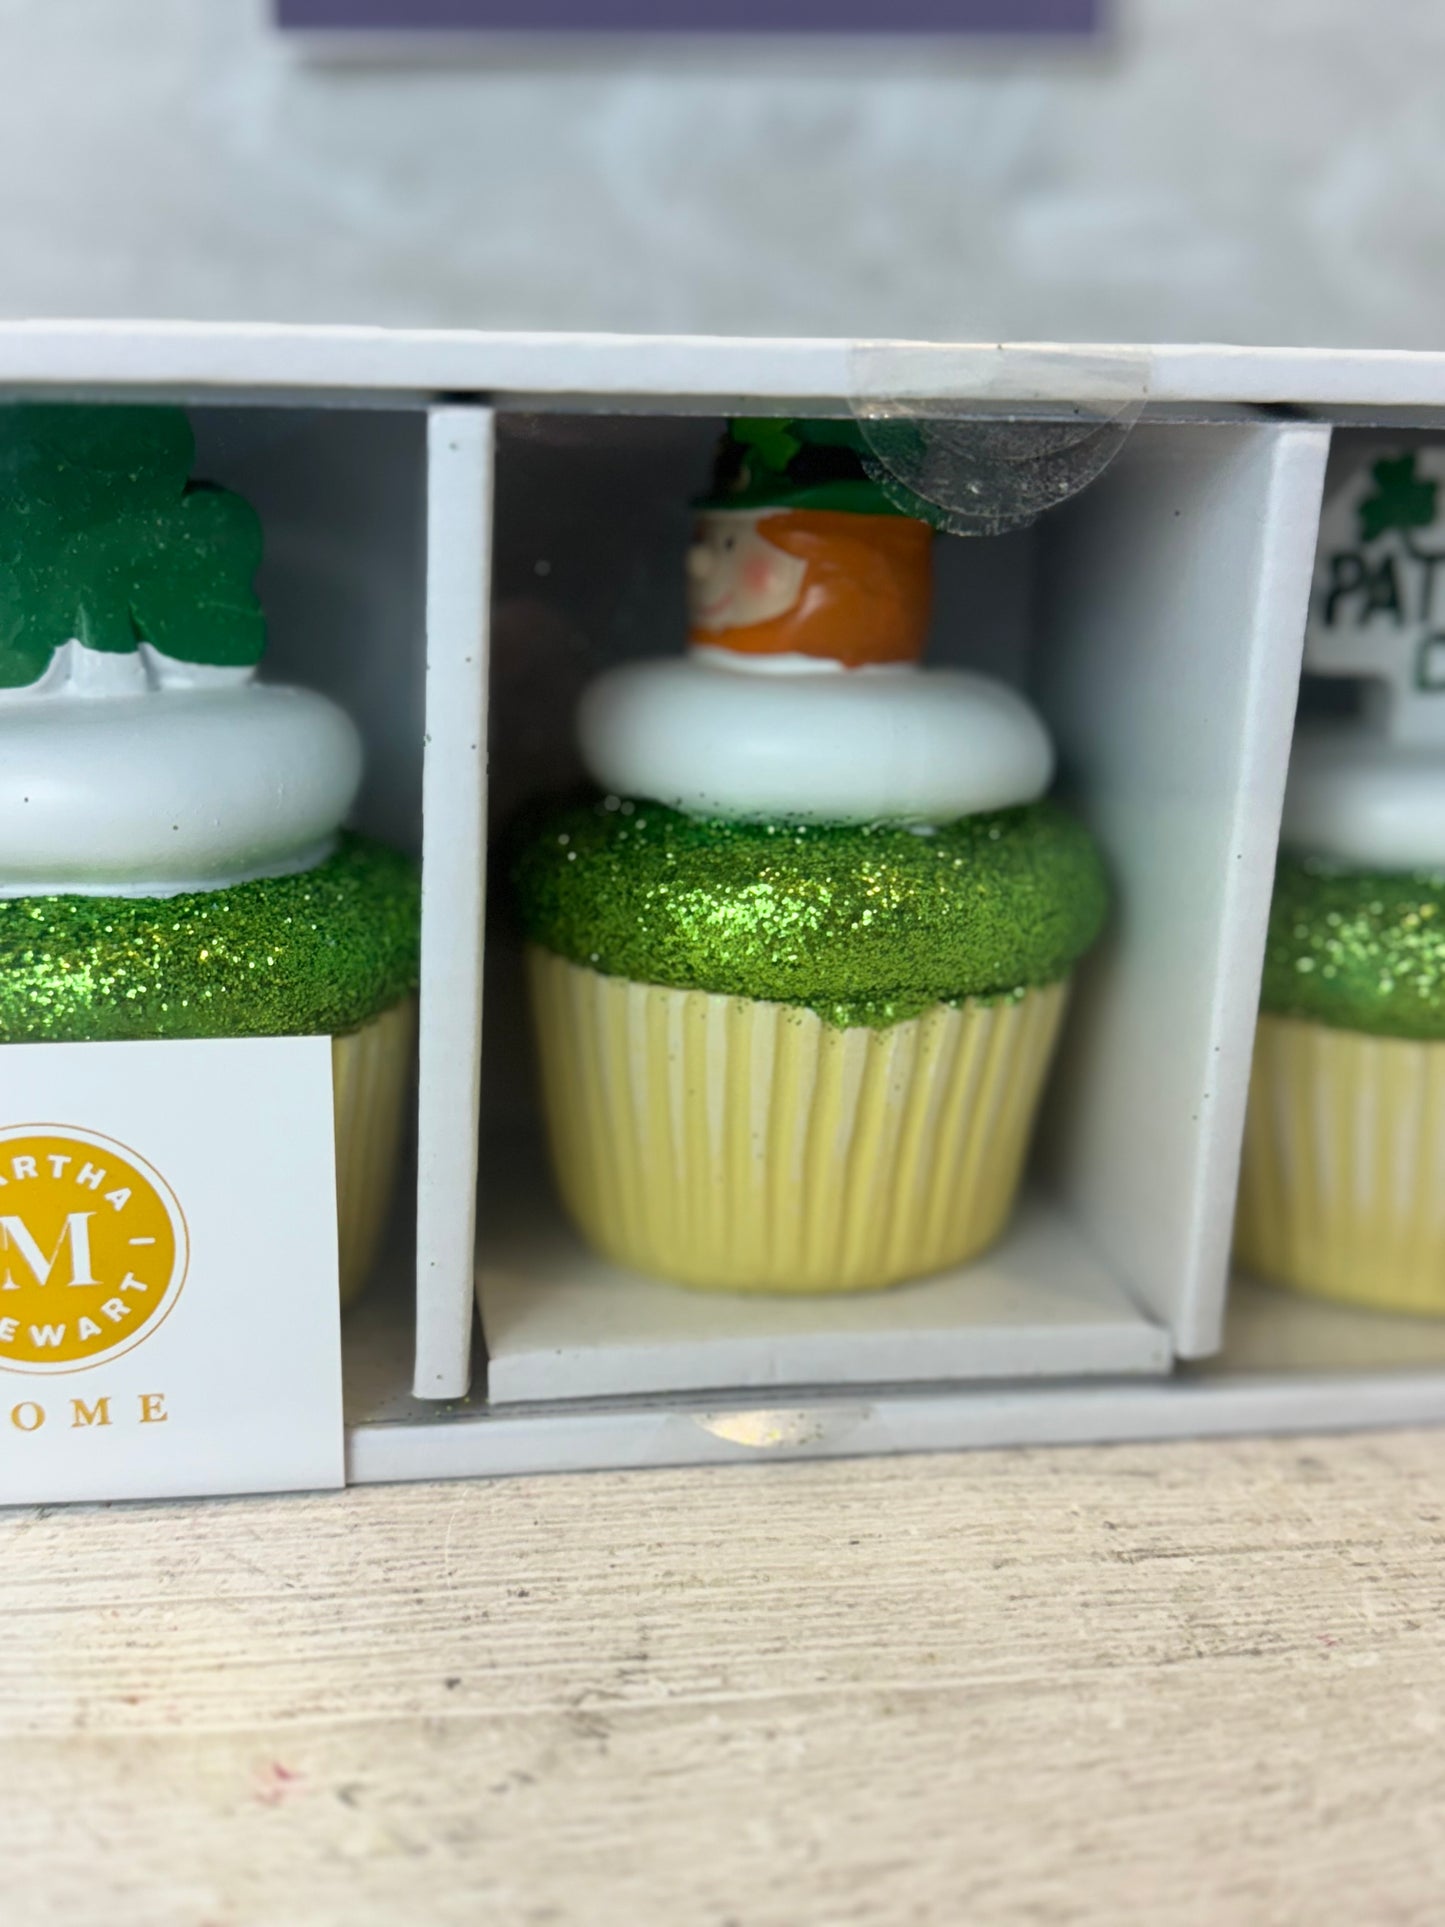 Martha Stewart St. Patrick's Day Cupcakes